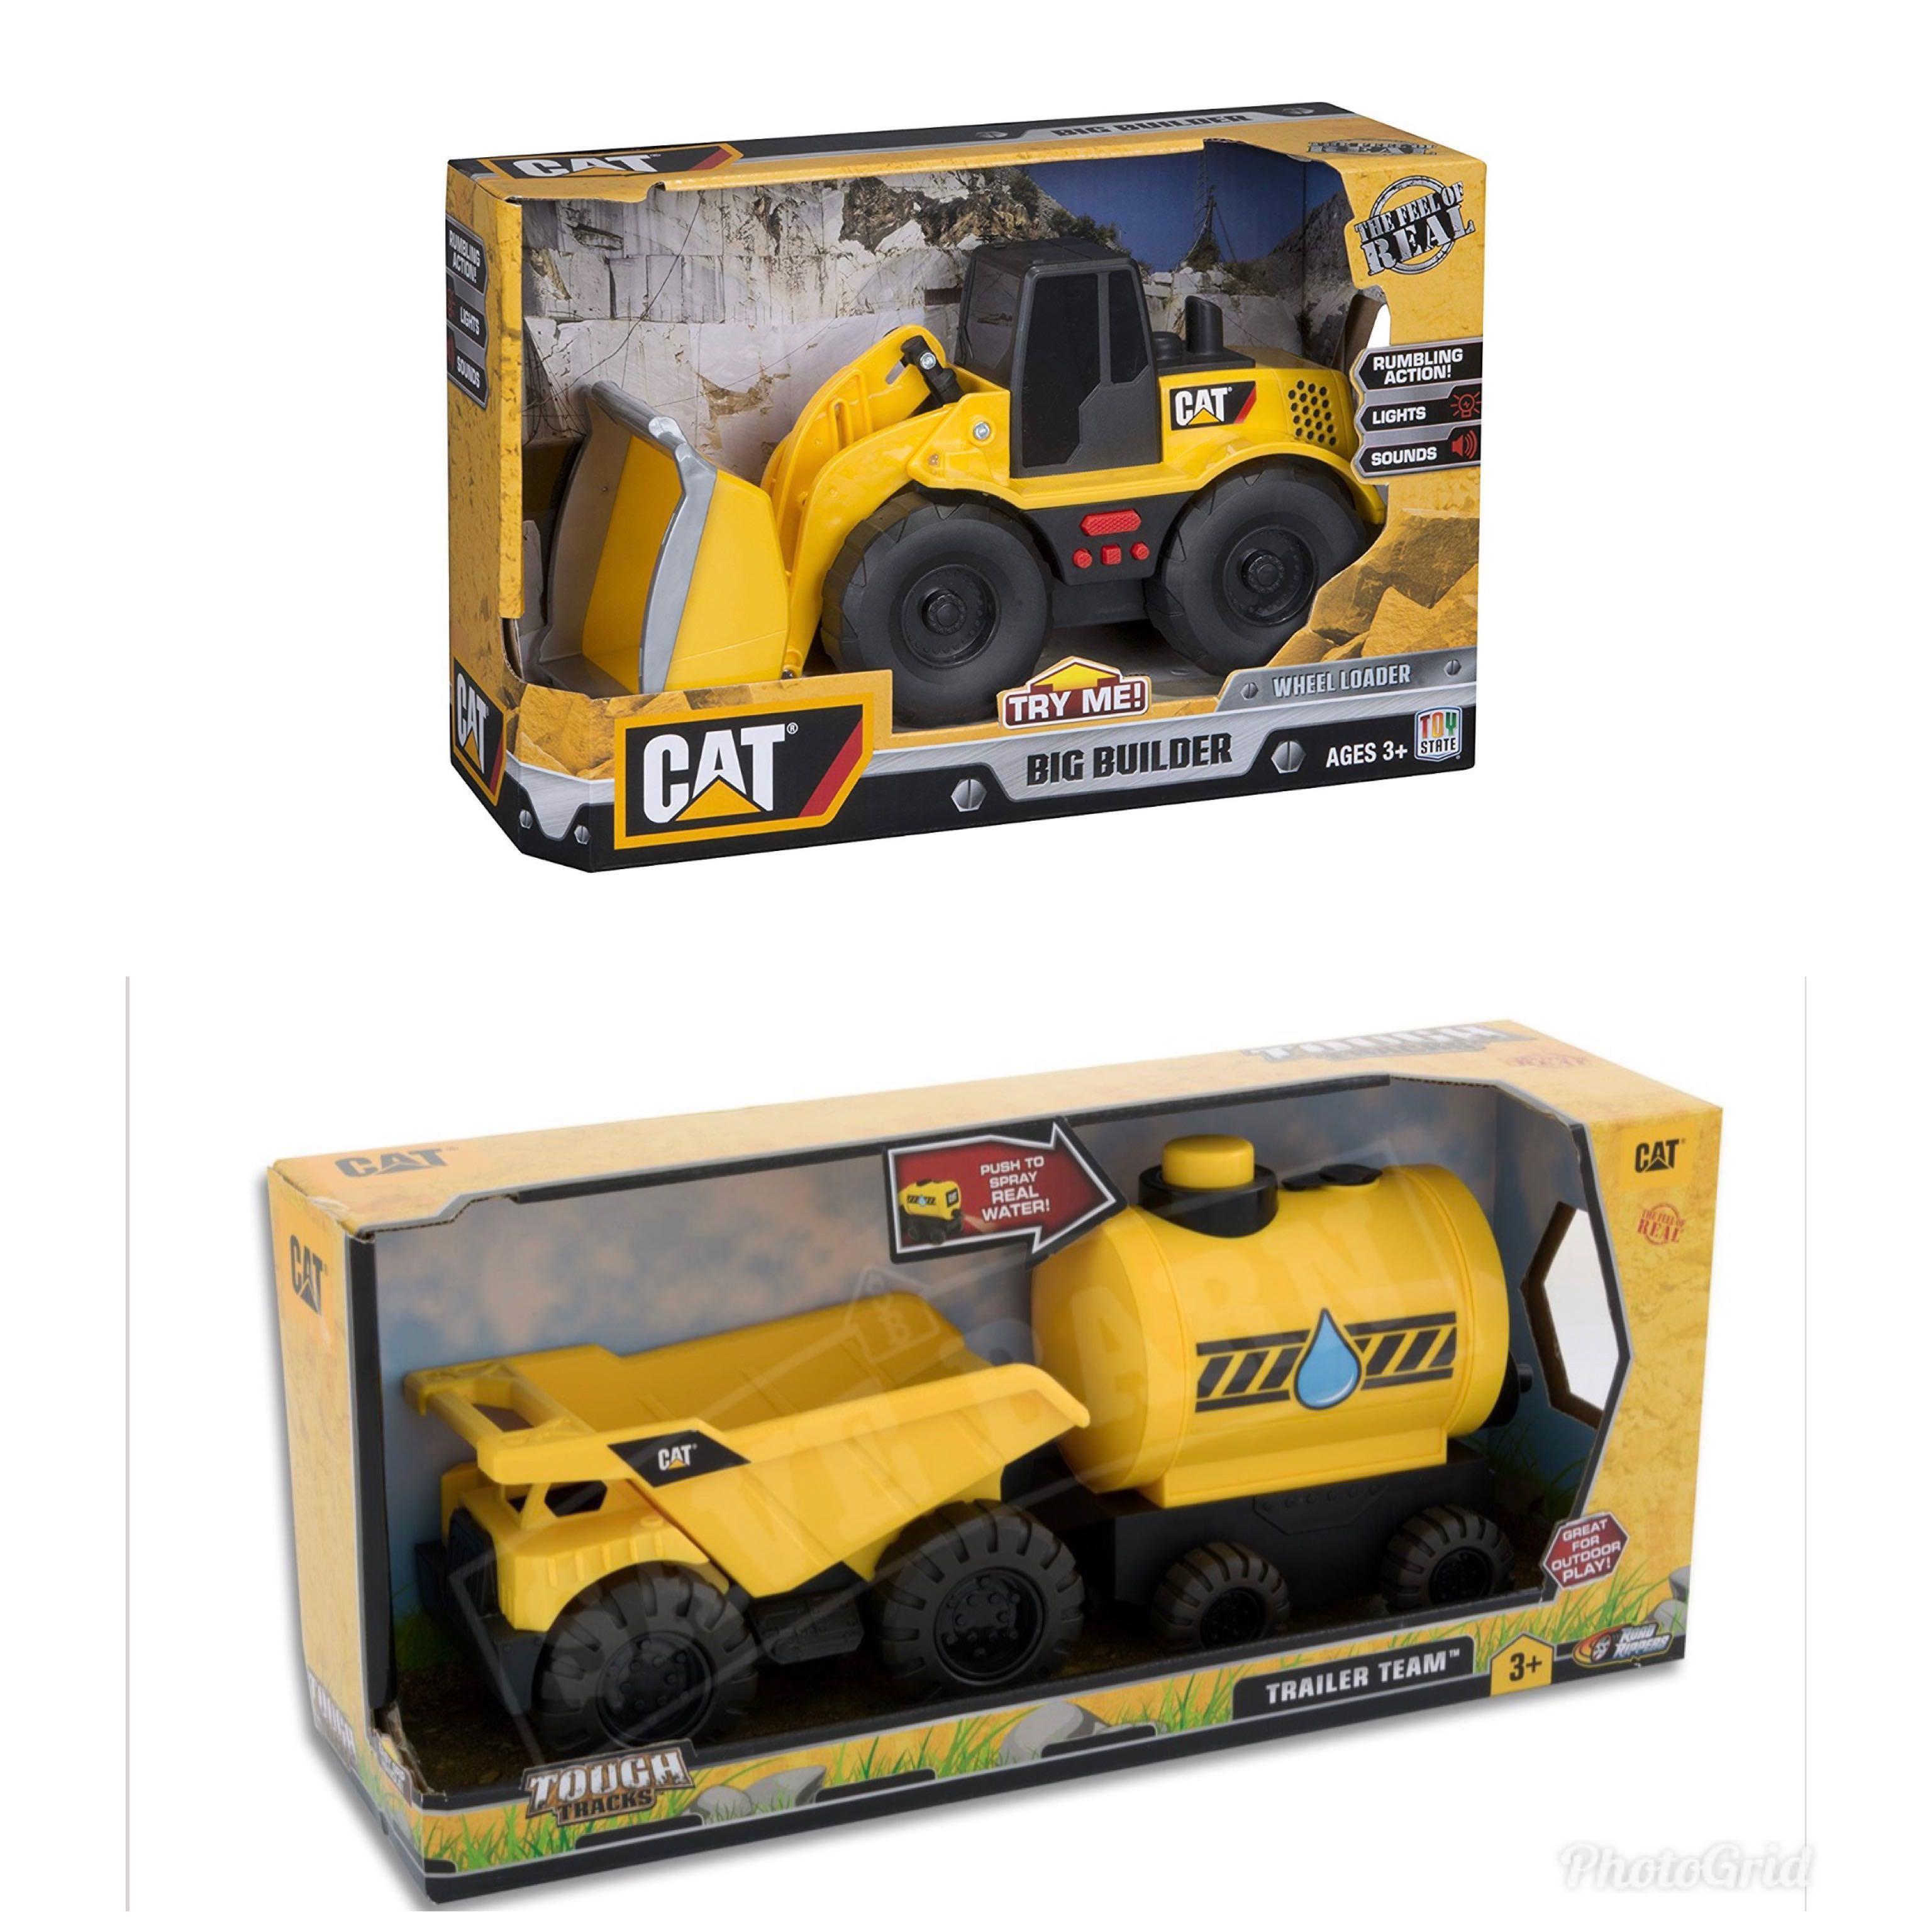 caterpillar toy trucks australia